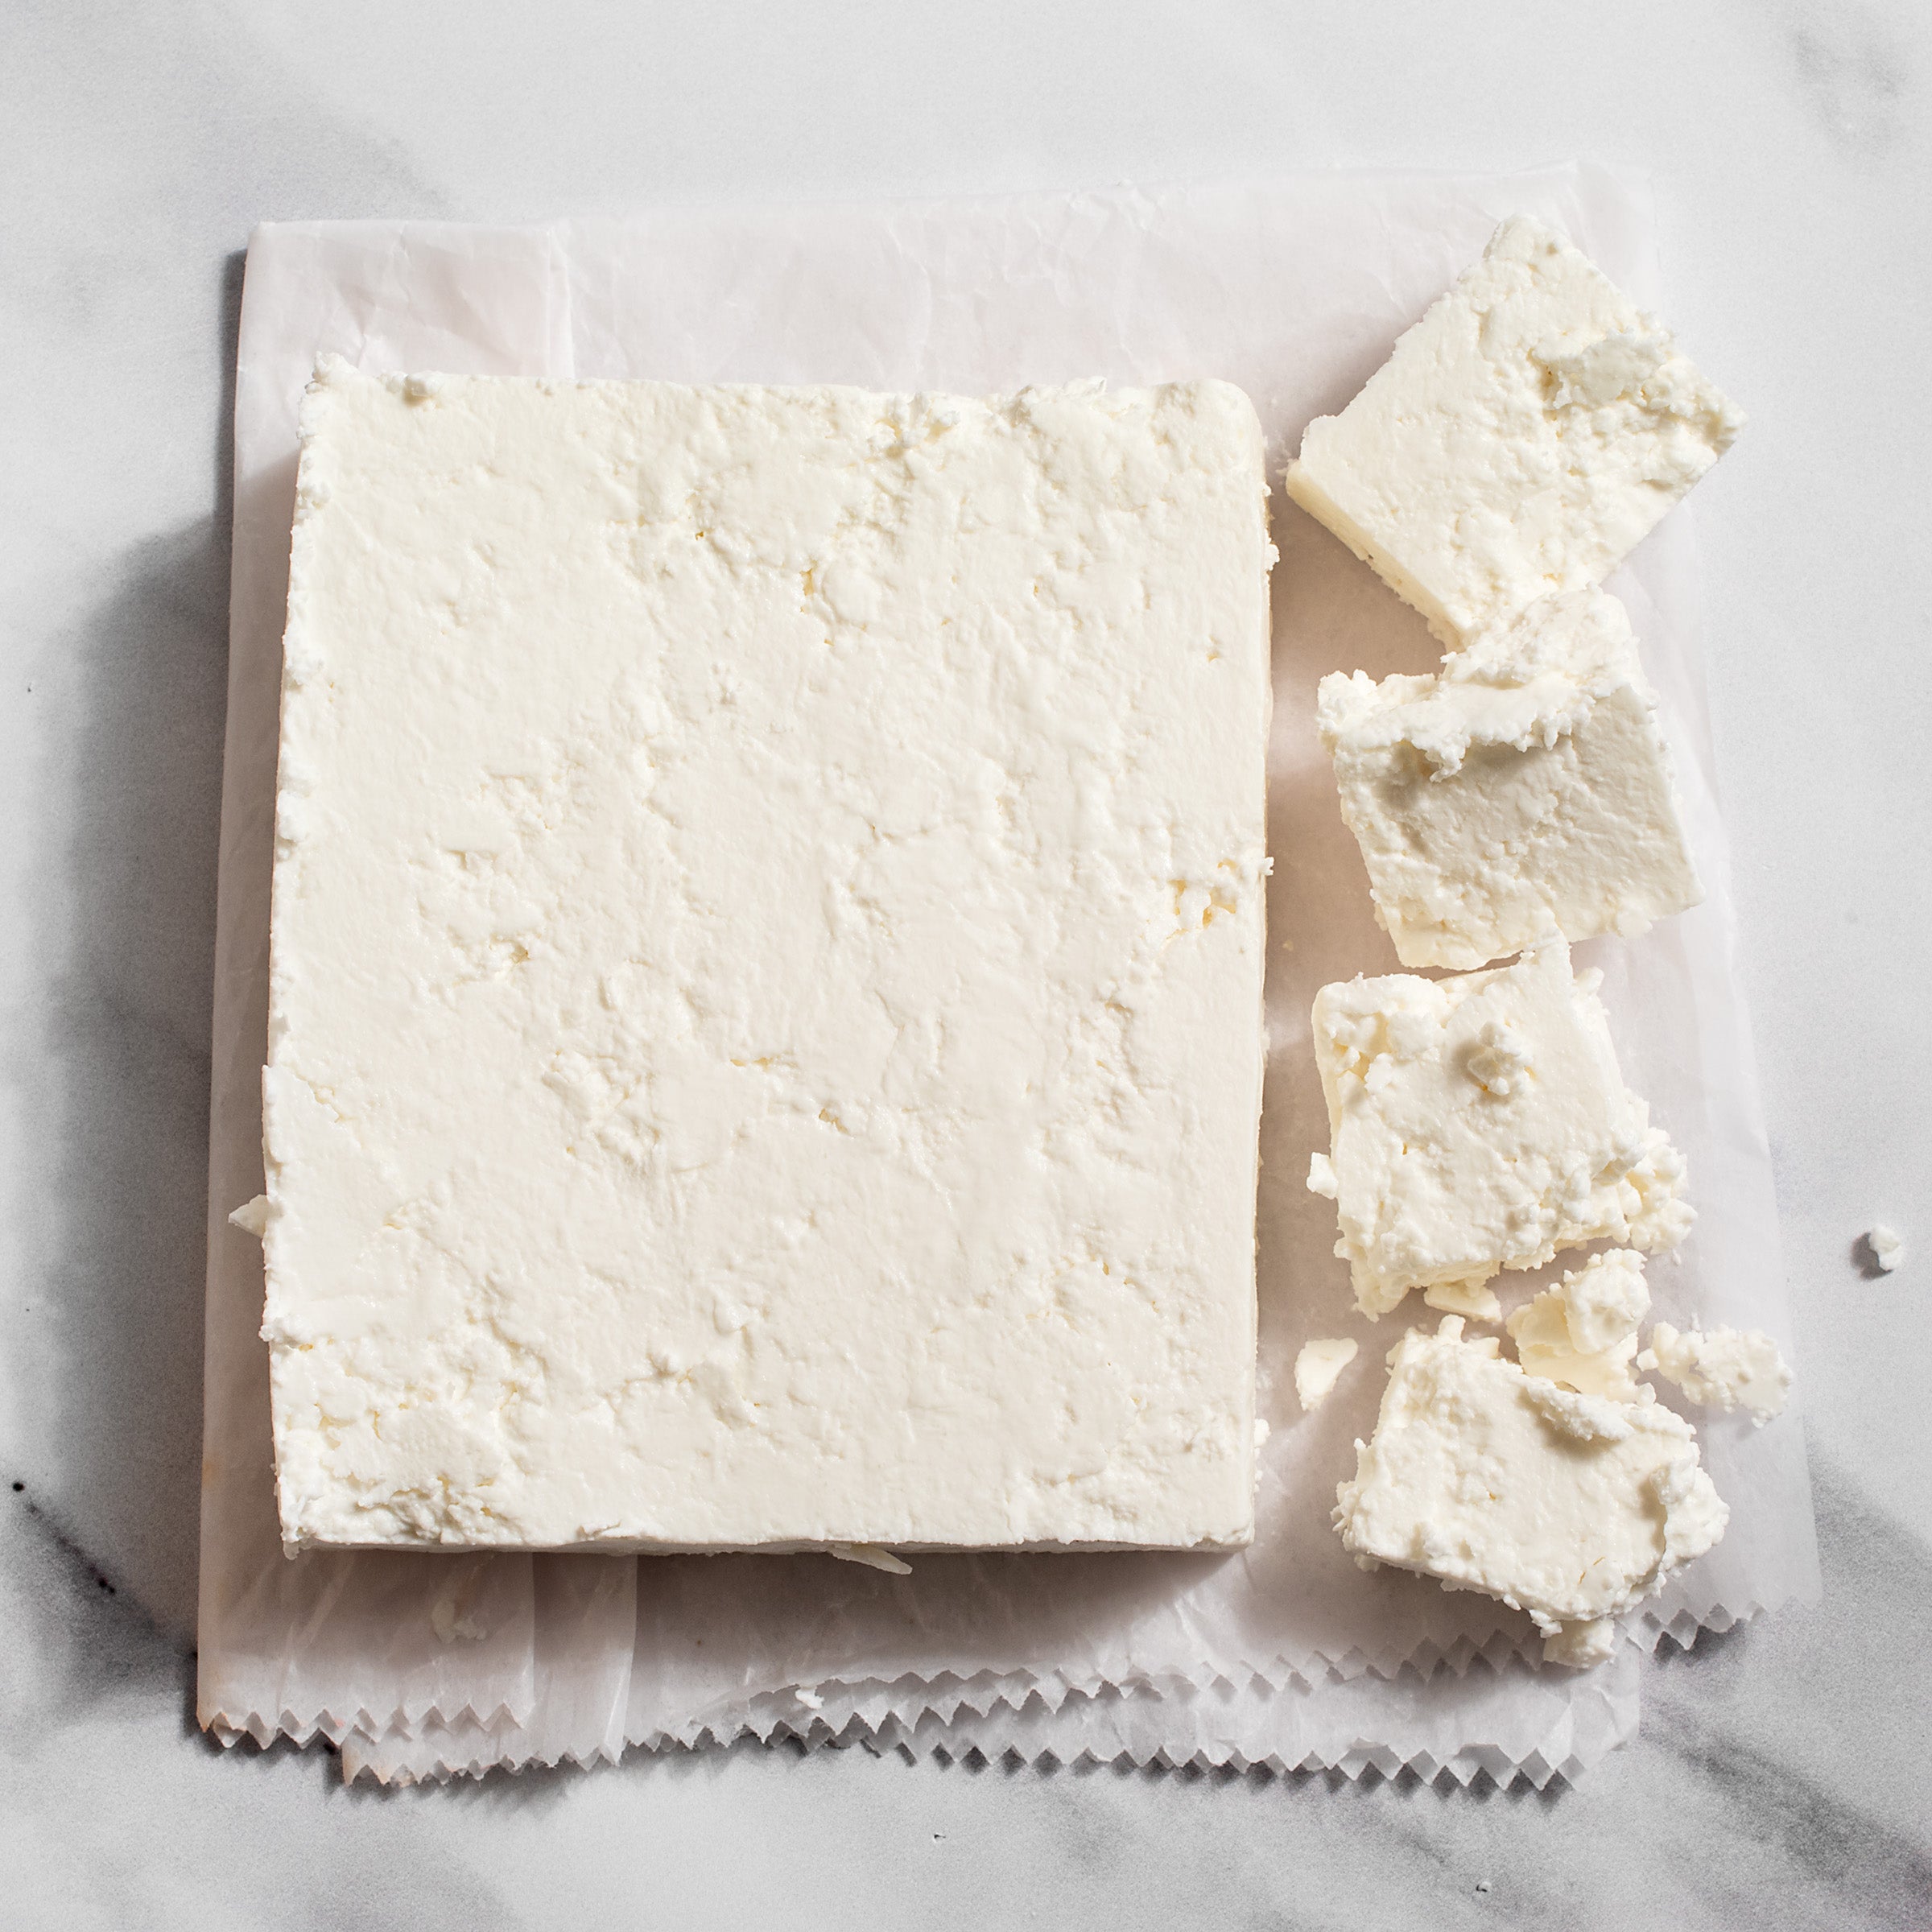 Cheese Bulk - Wholesale Cheese Supplier